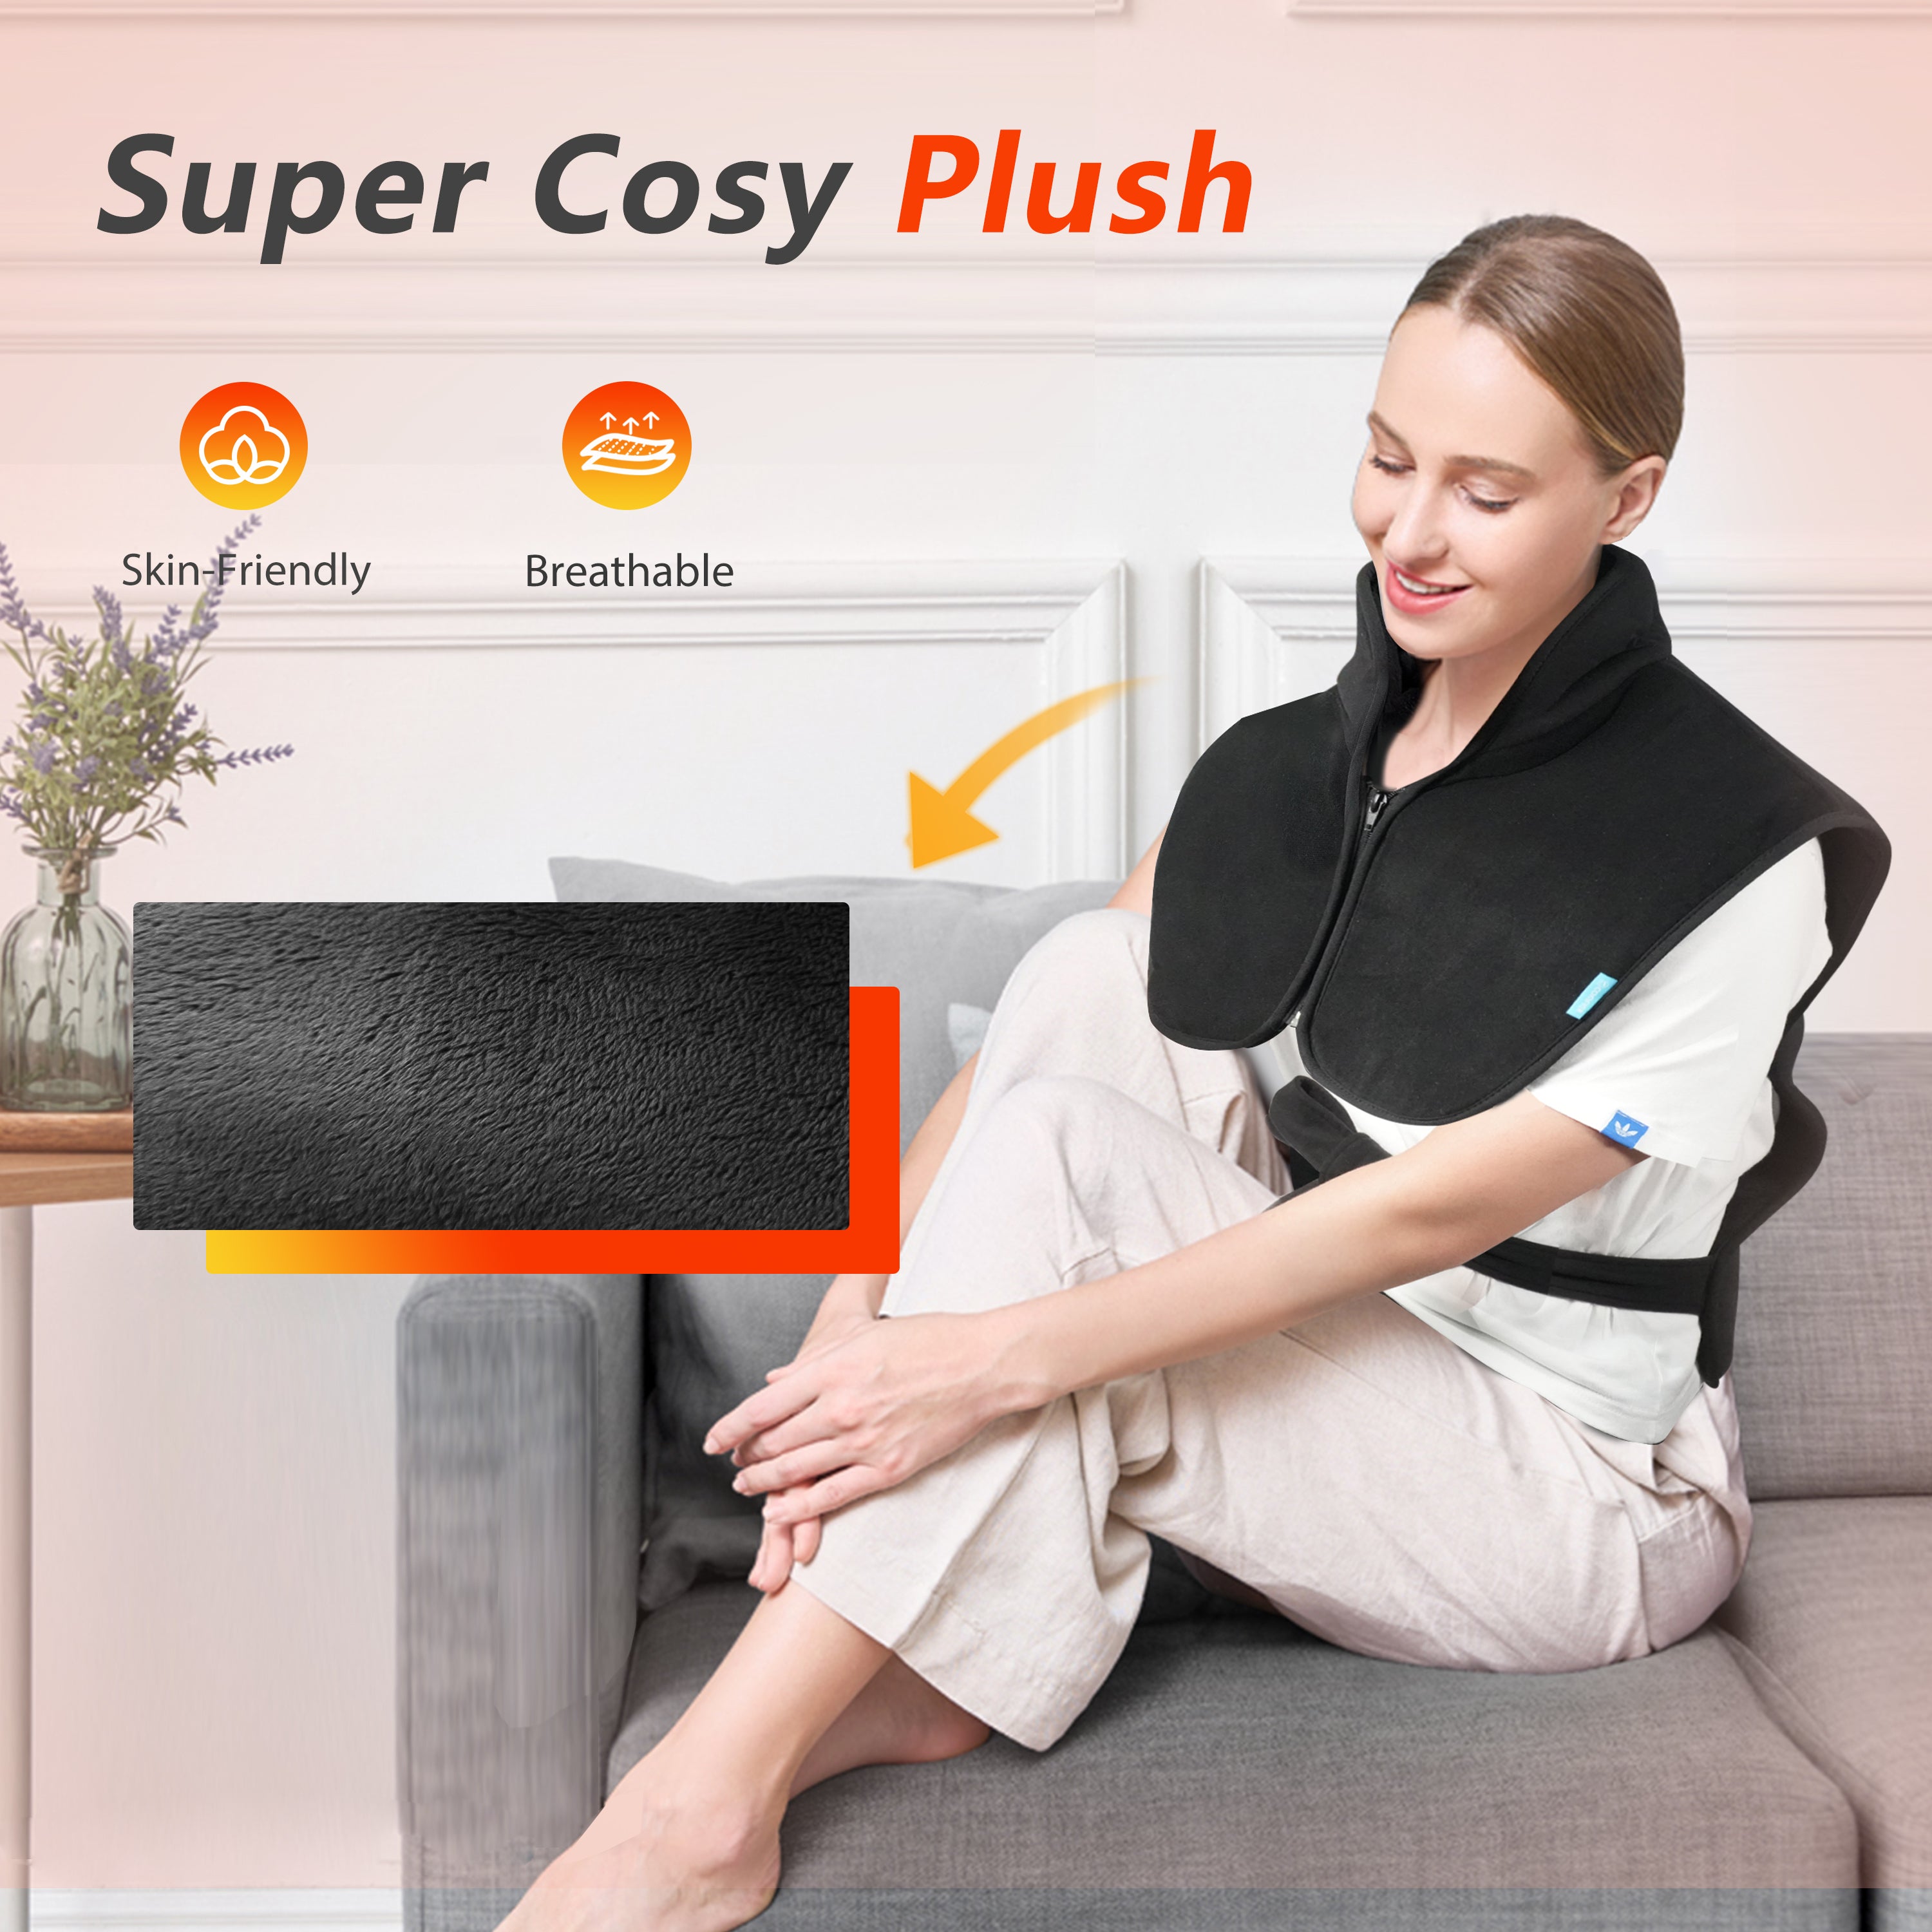 Cozy Neck Pillow Massager - For Neck & Shoulder Discomfort